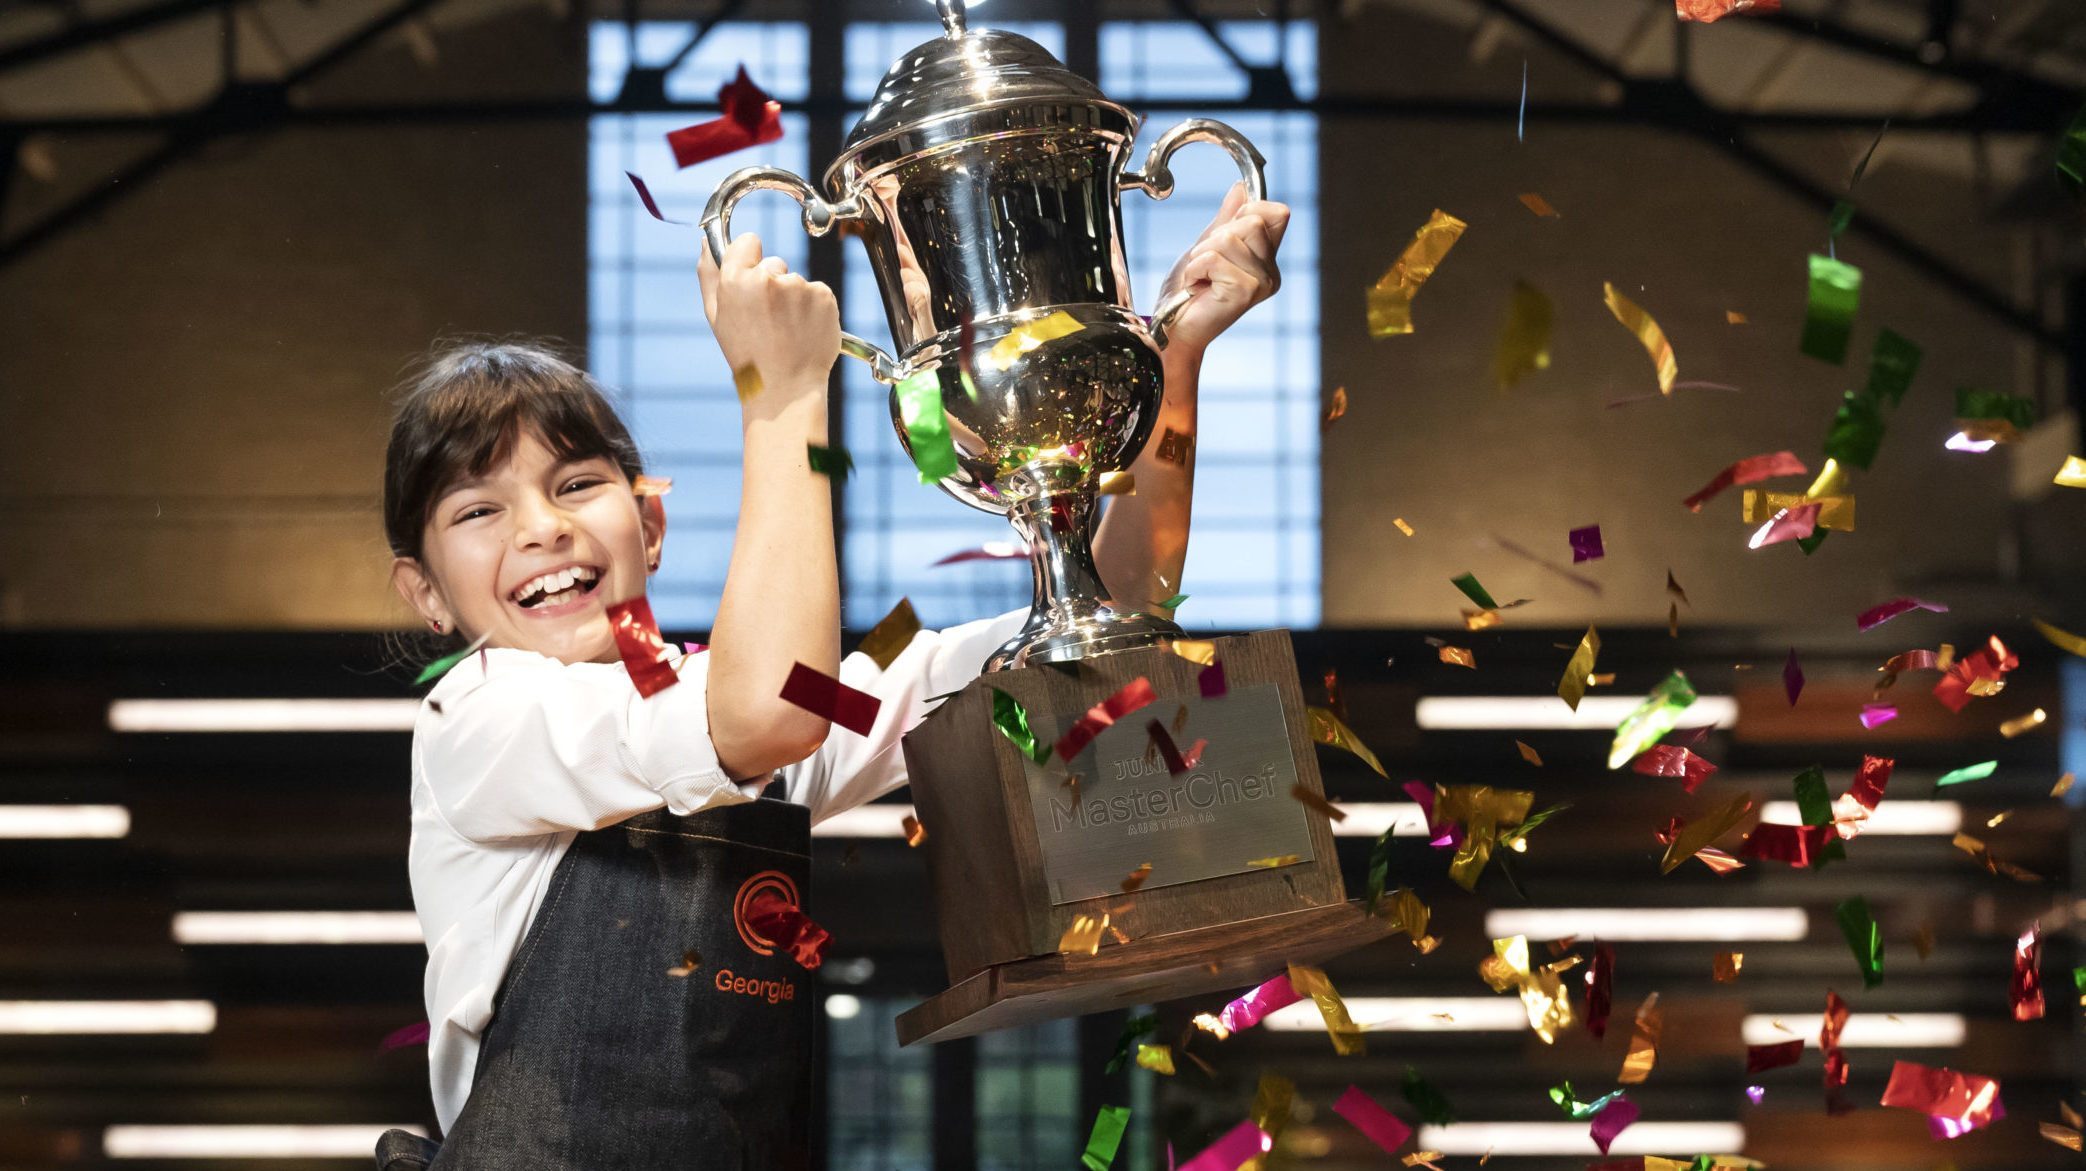 Junior Masterchef winner crowned to 881,000 metro viewers